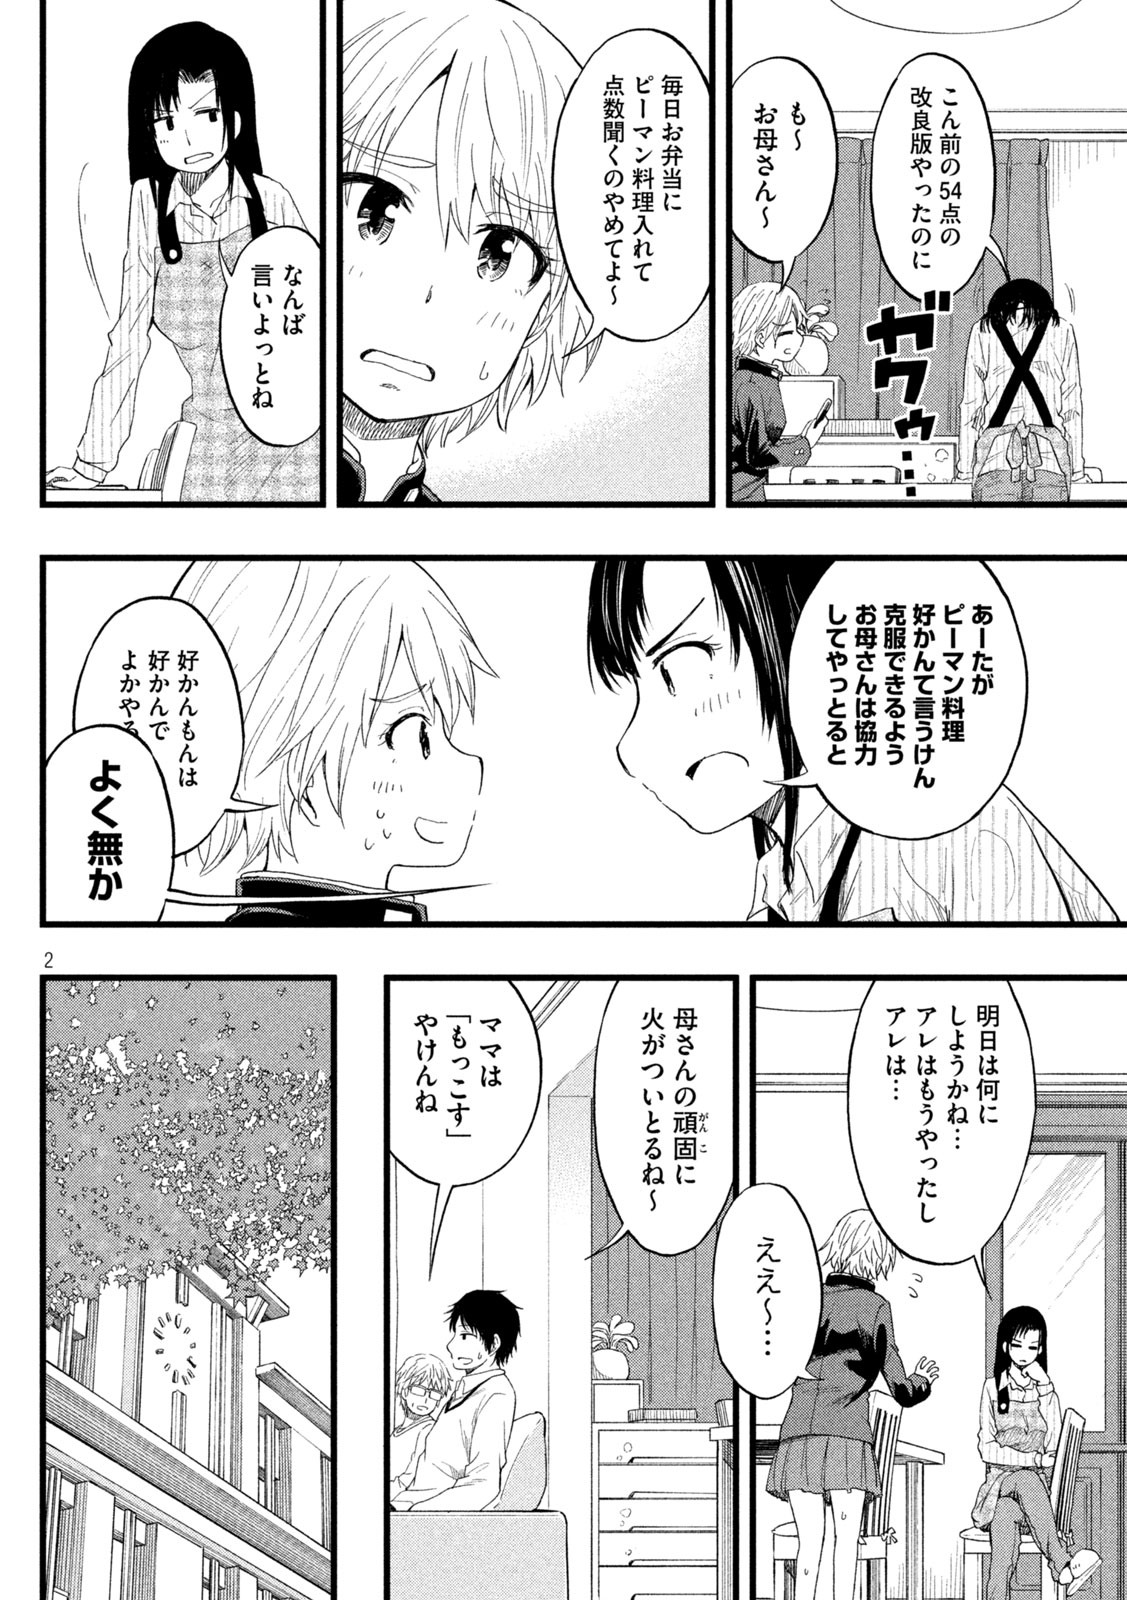 Koharu haru! - Chapter 61 - Page 2